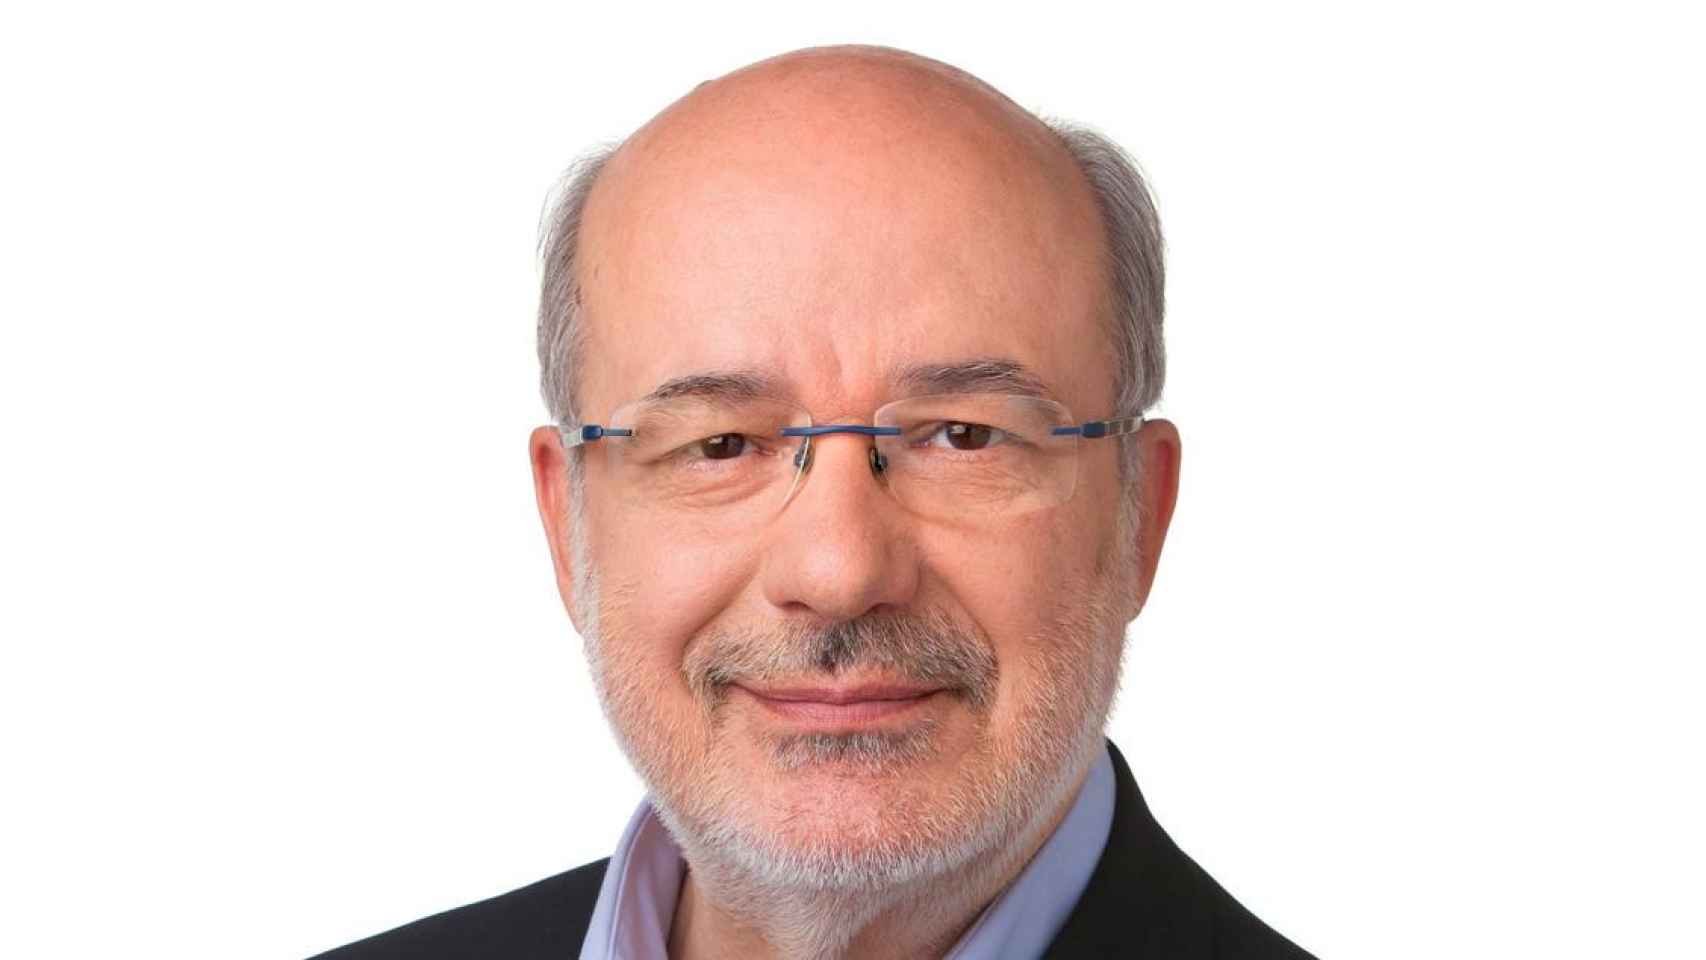 El exeurodiputado Josep-Maria Terricabras